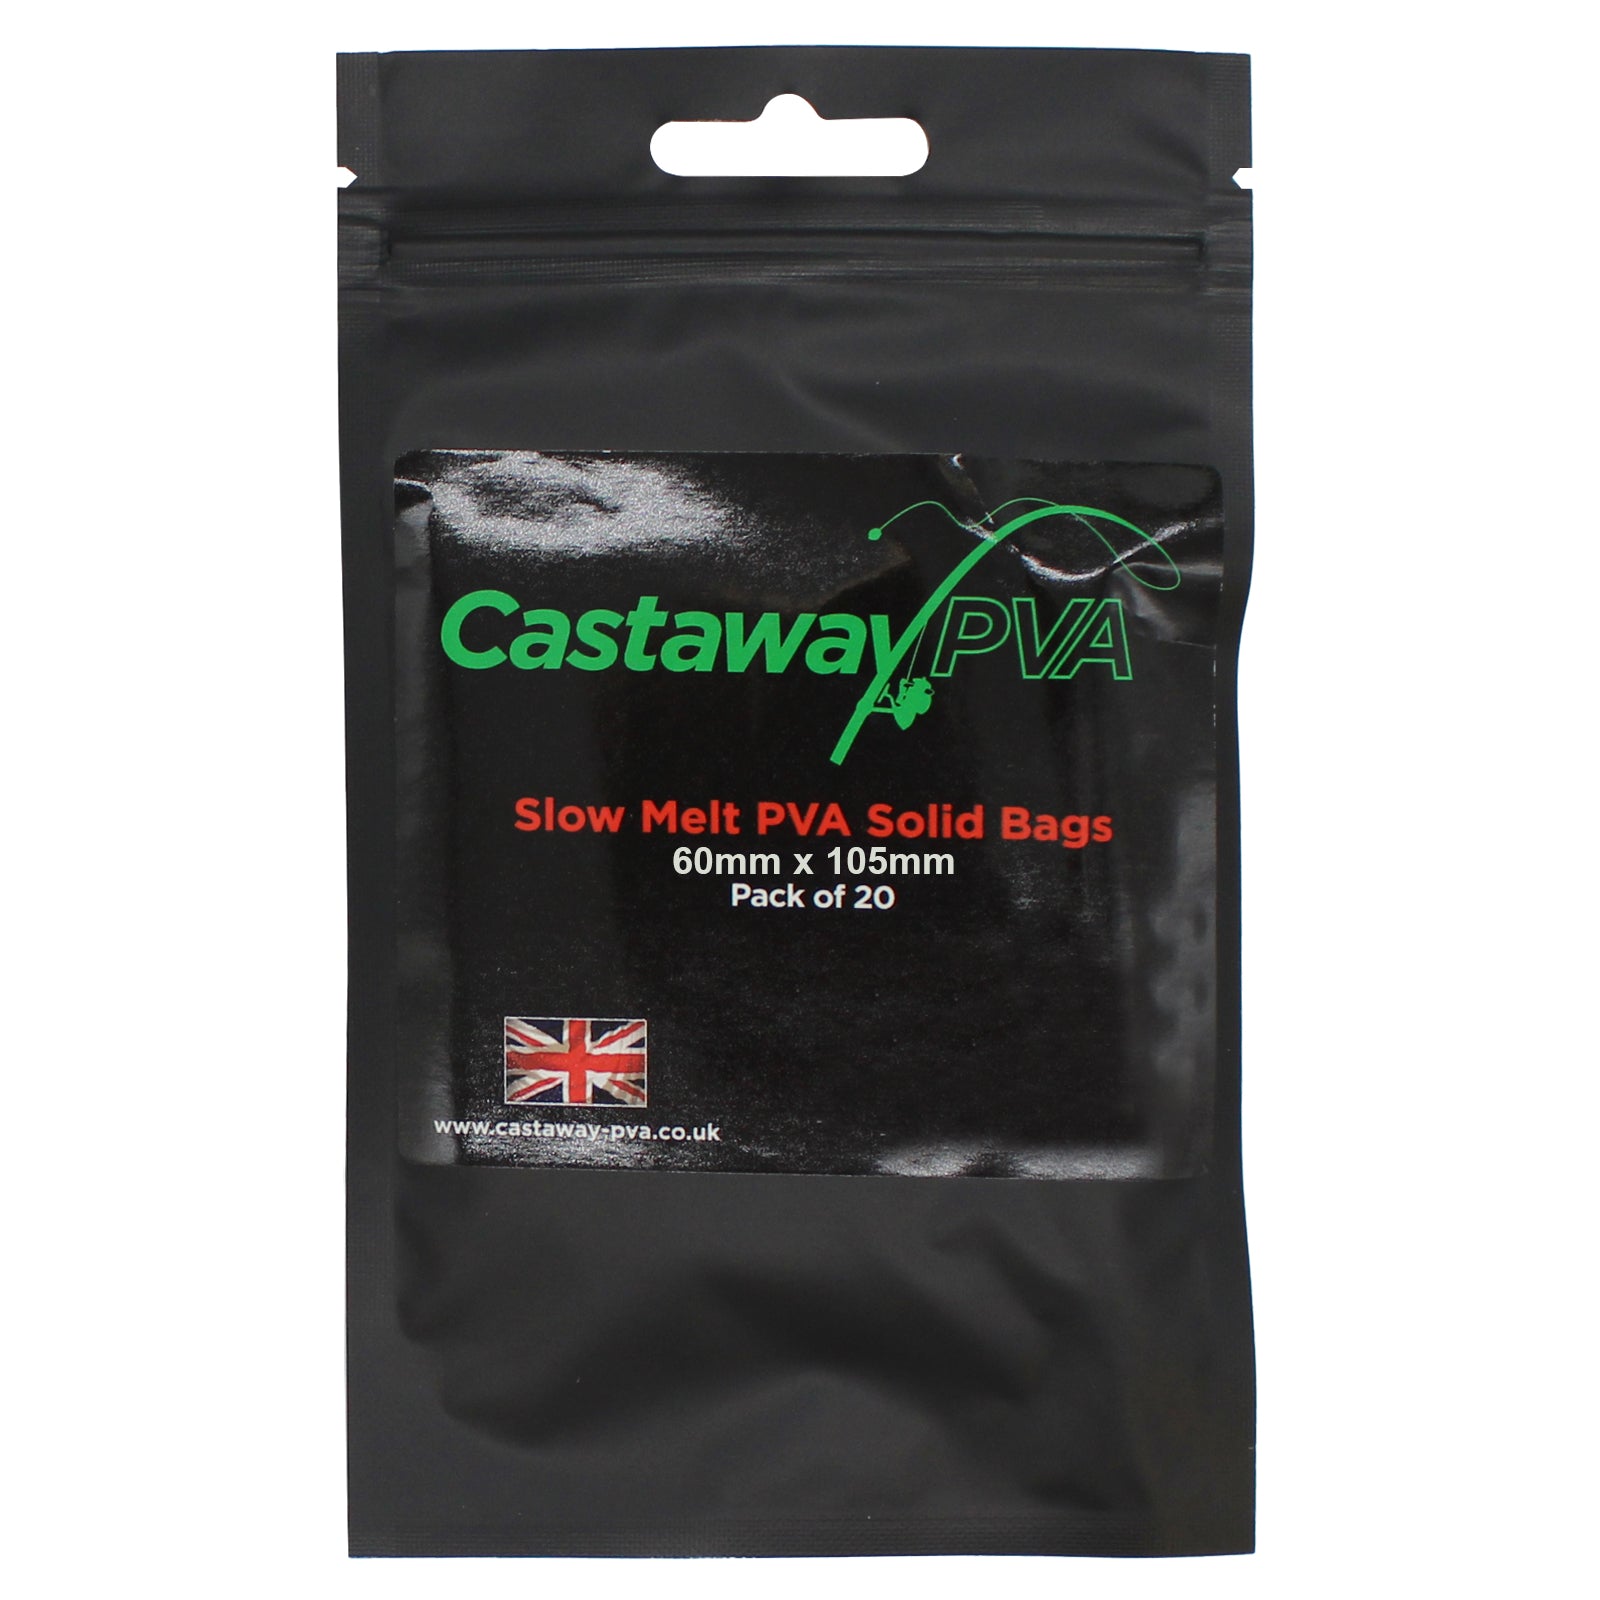 Castaway PVA Slow Melt PVA Solid Bags 60mm Pack of 20